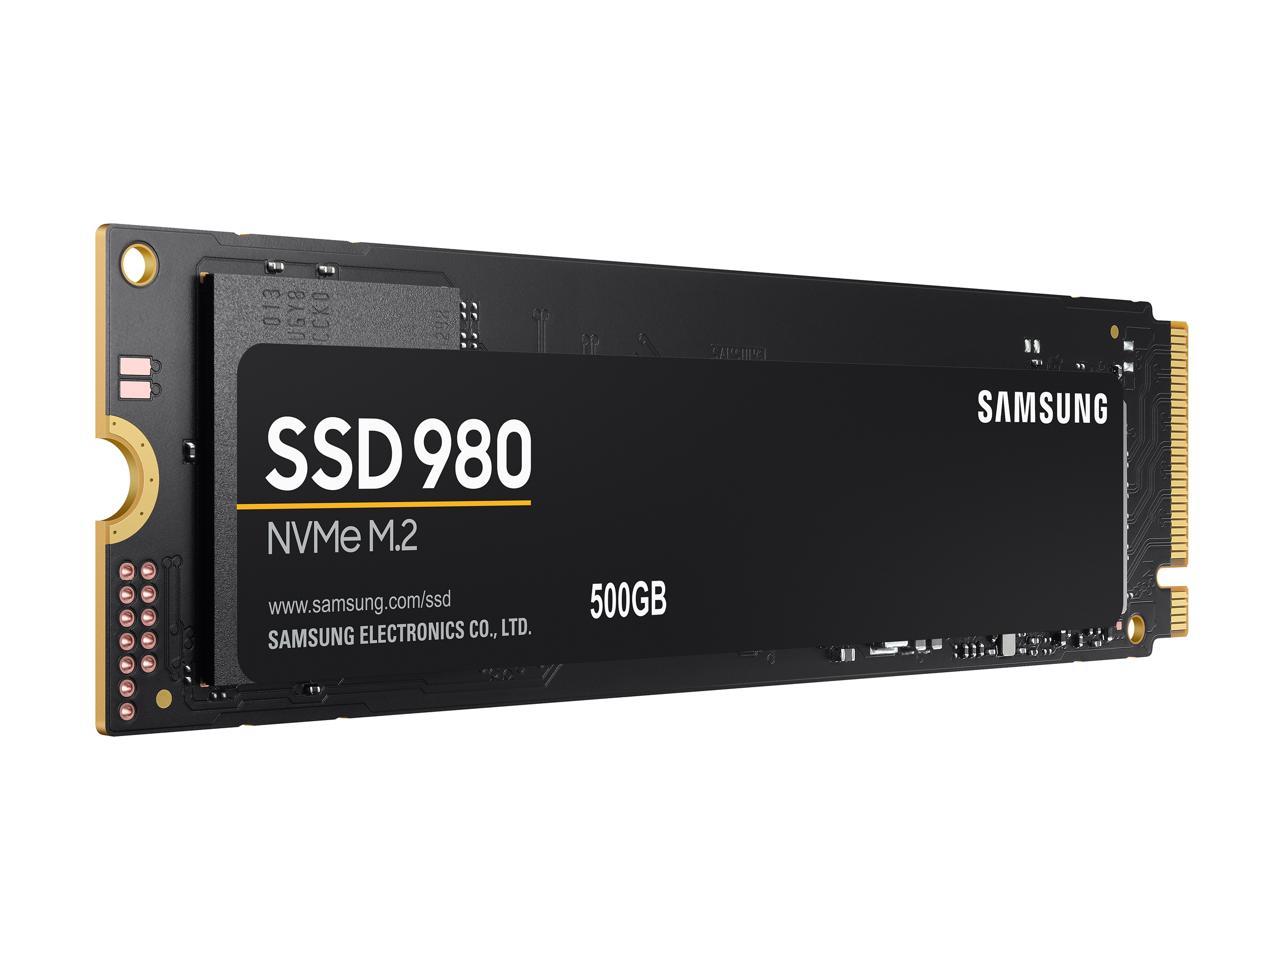 500GB Samsung 980 NVMe SSD @Newegg $60